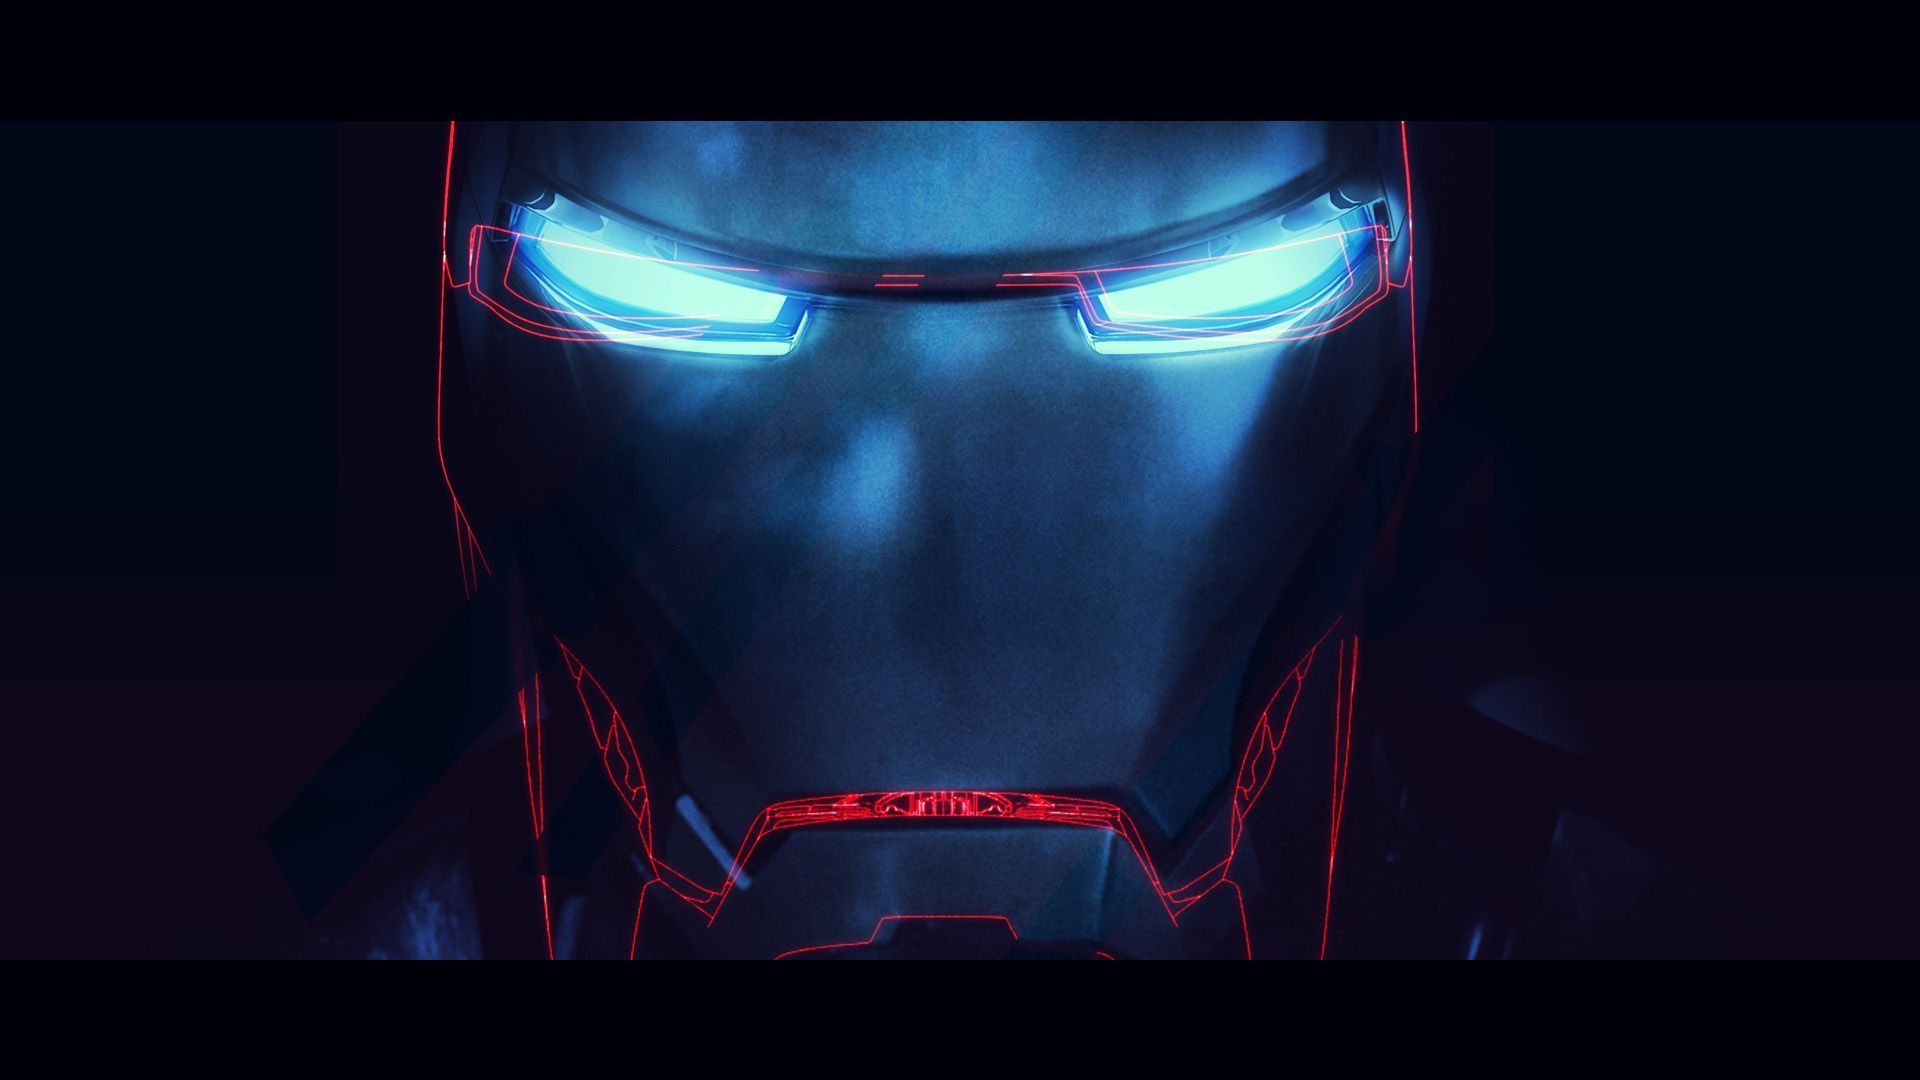 Iron Man Aesthetic Wallpaper 2020